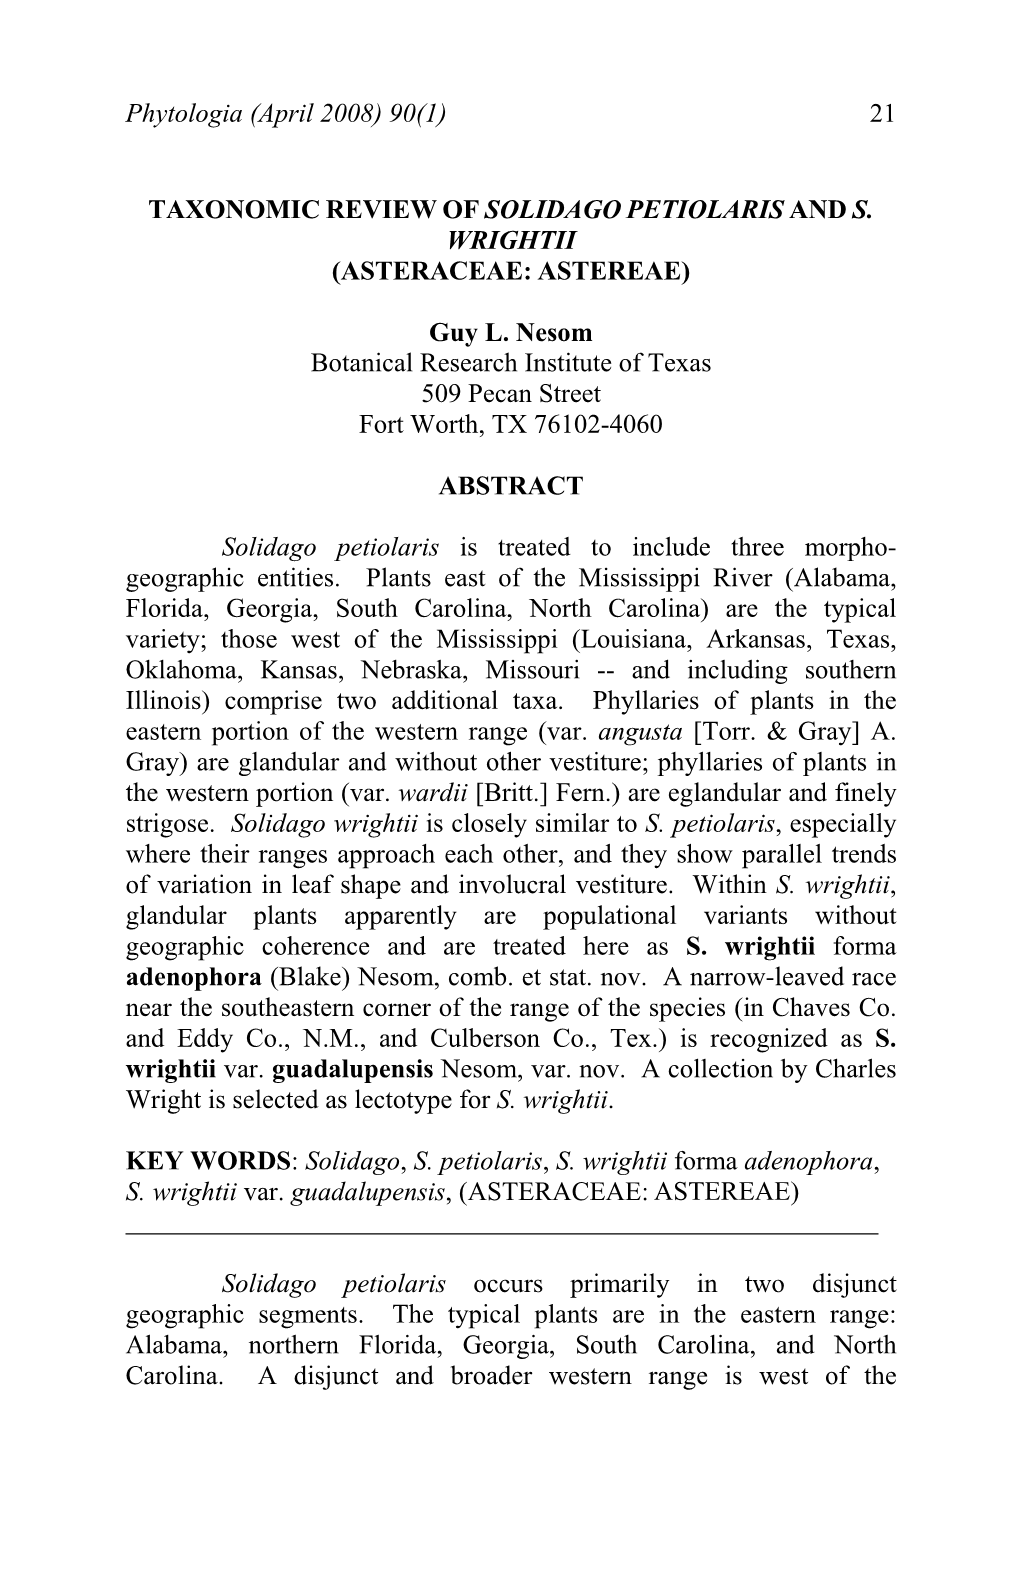 Taxonomic Review of Solidago Petiolaris and S. Wrightii (Asteraceae: Astereae)